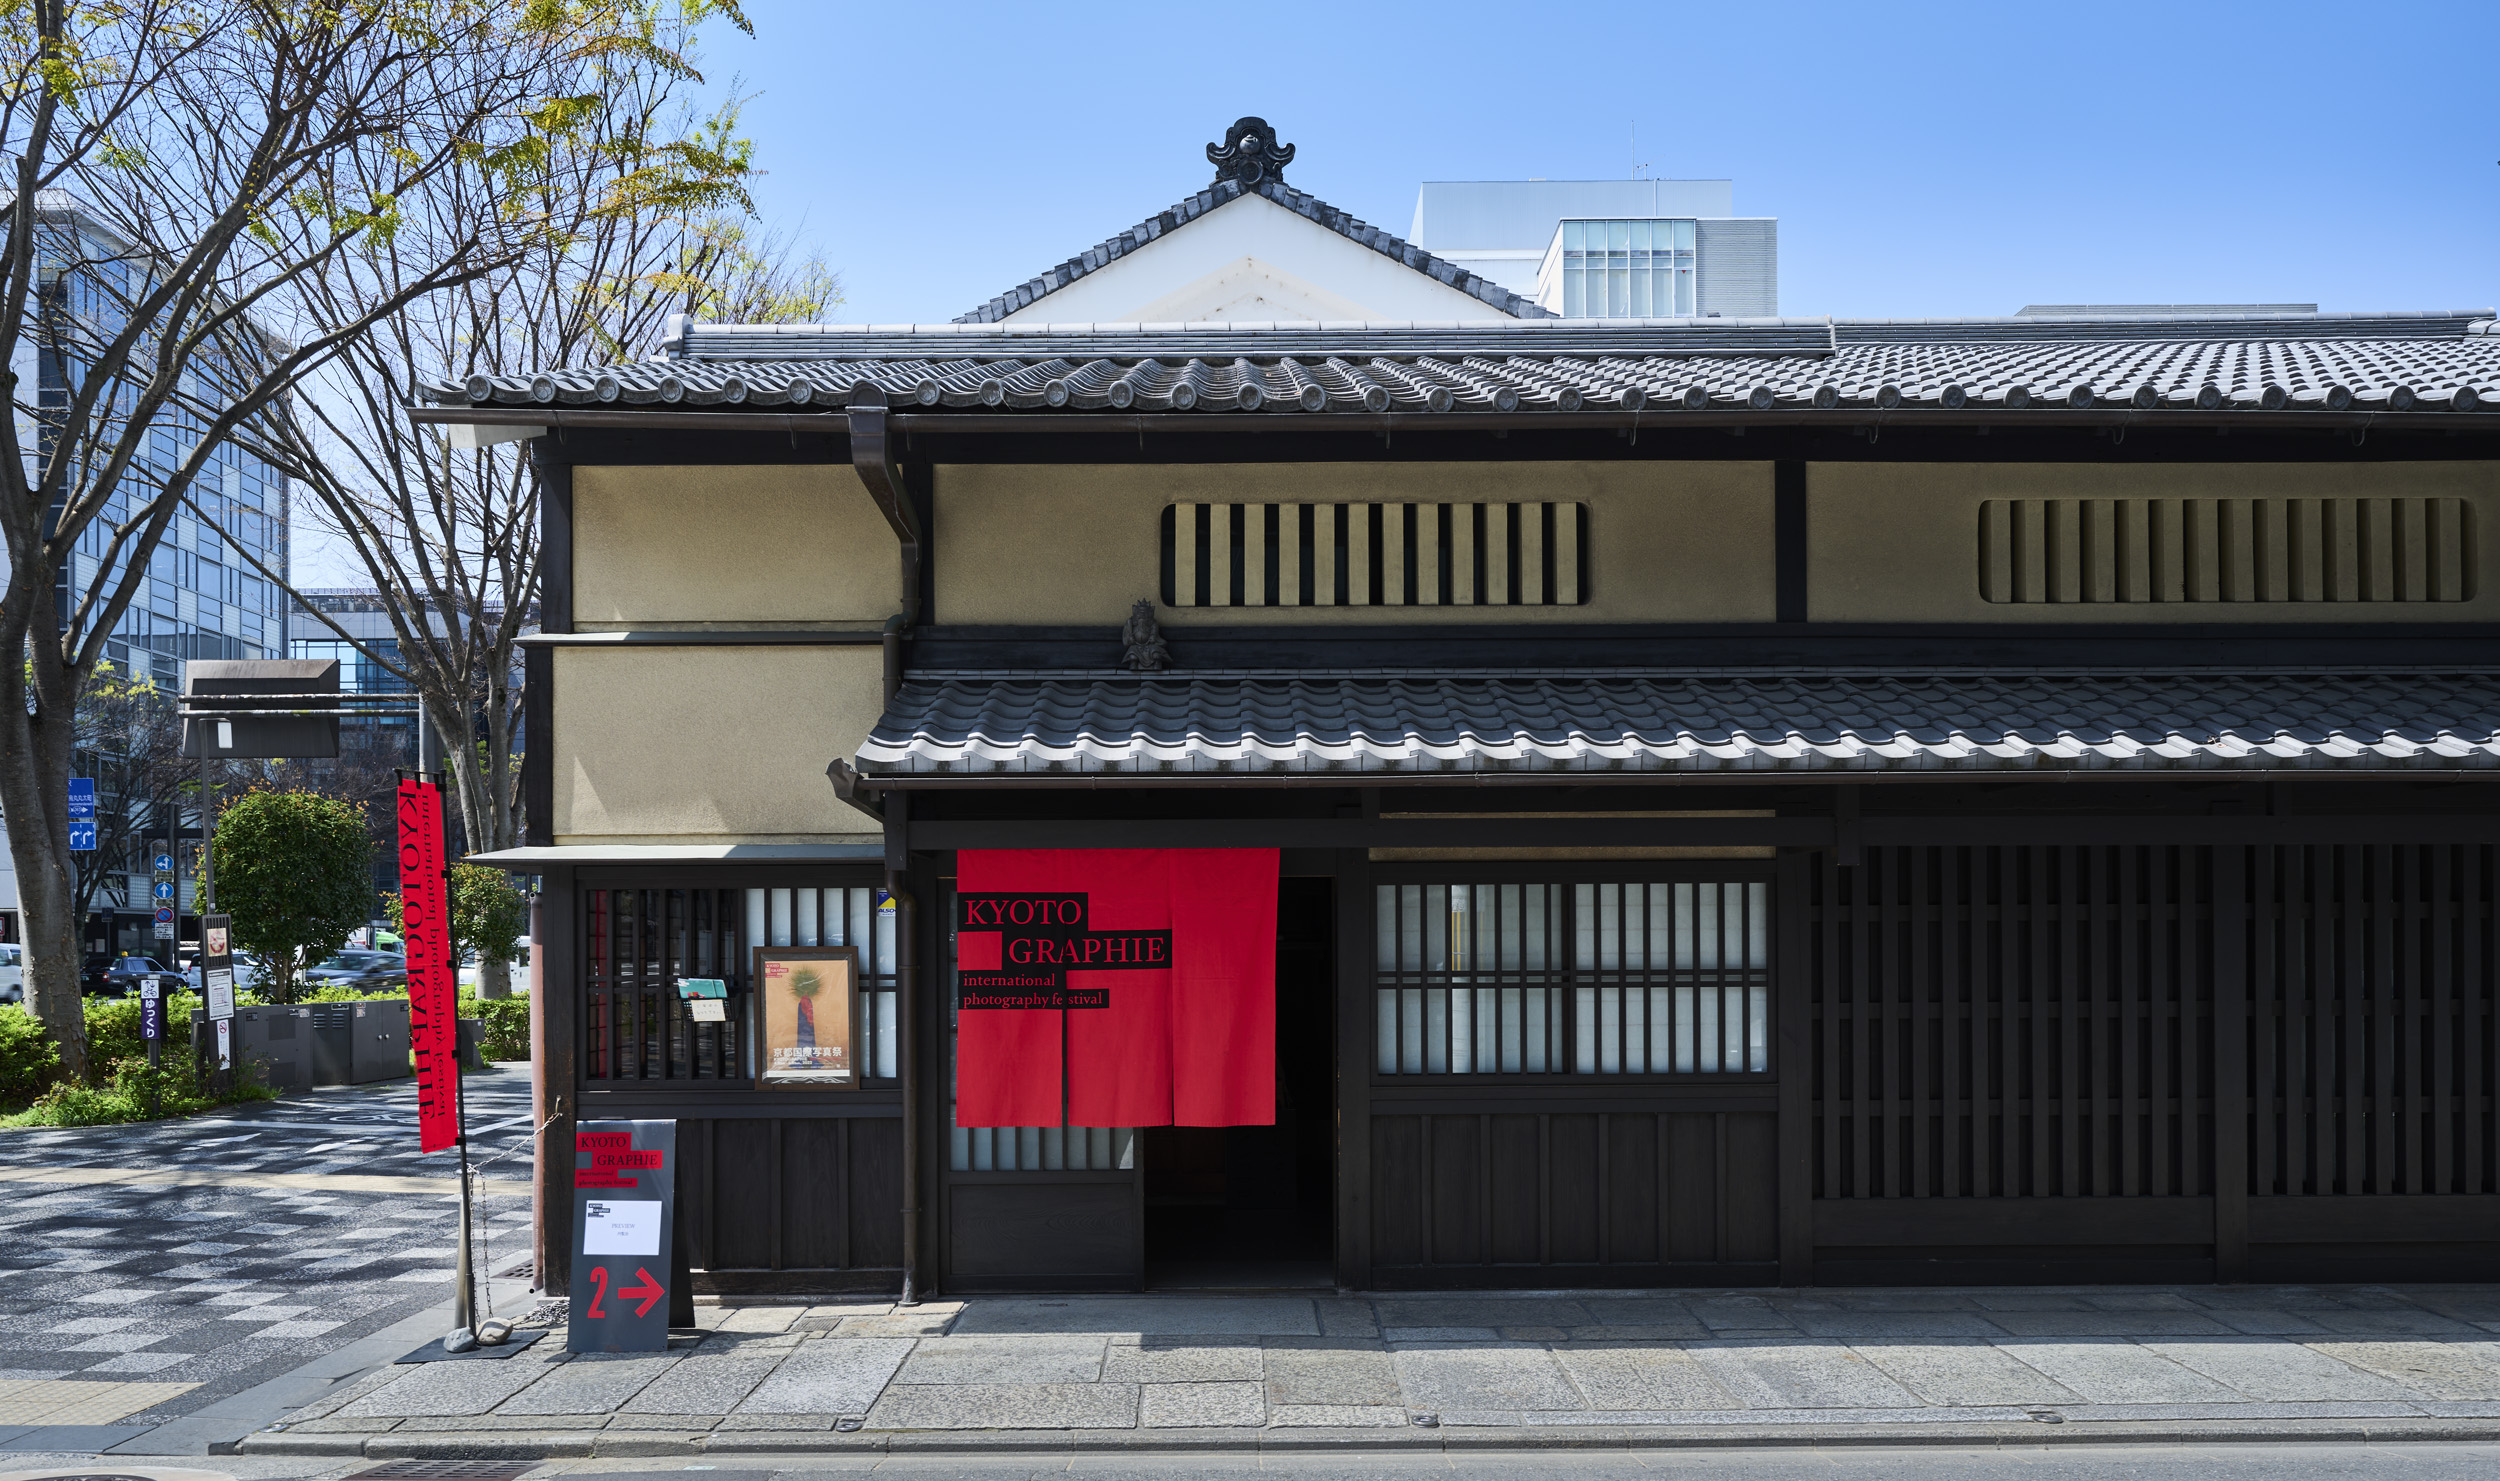 KYOTOGRAPHIE 京都国際写真祭 2022